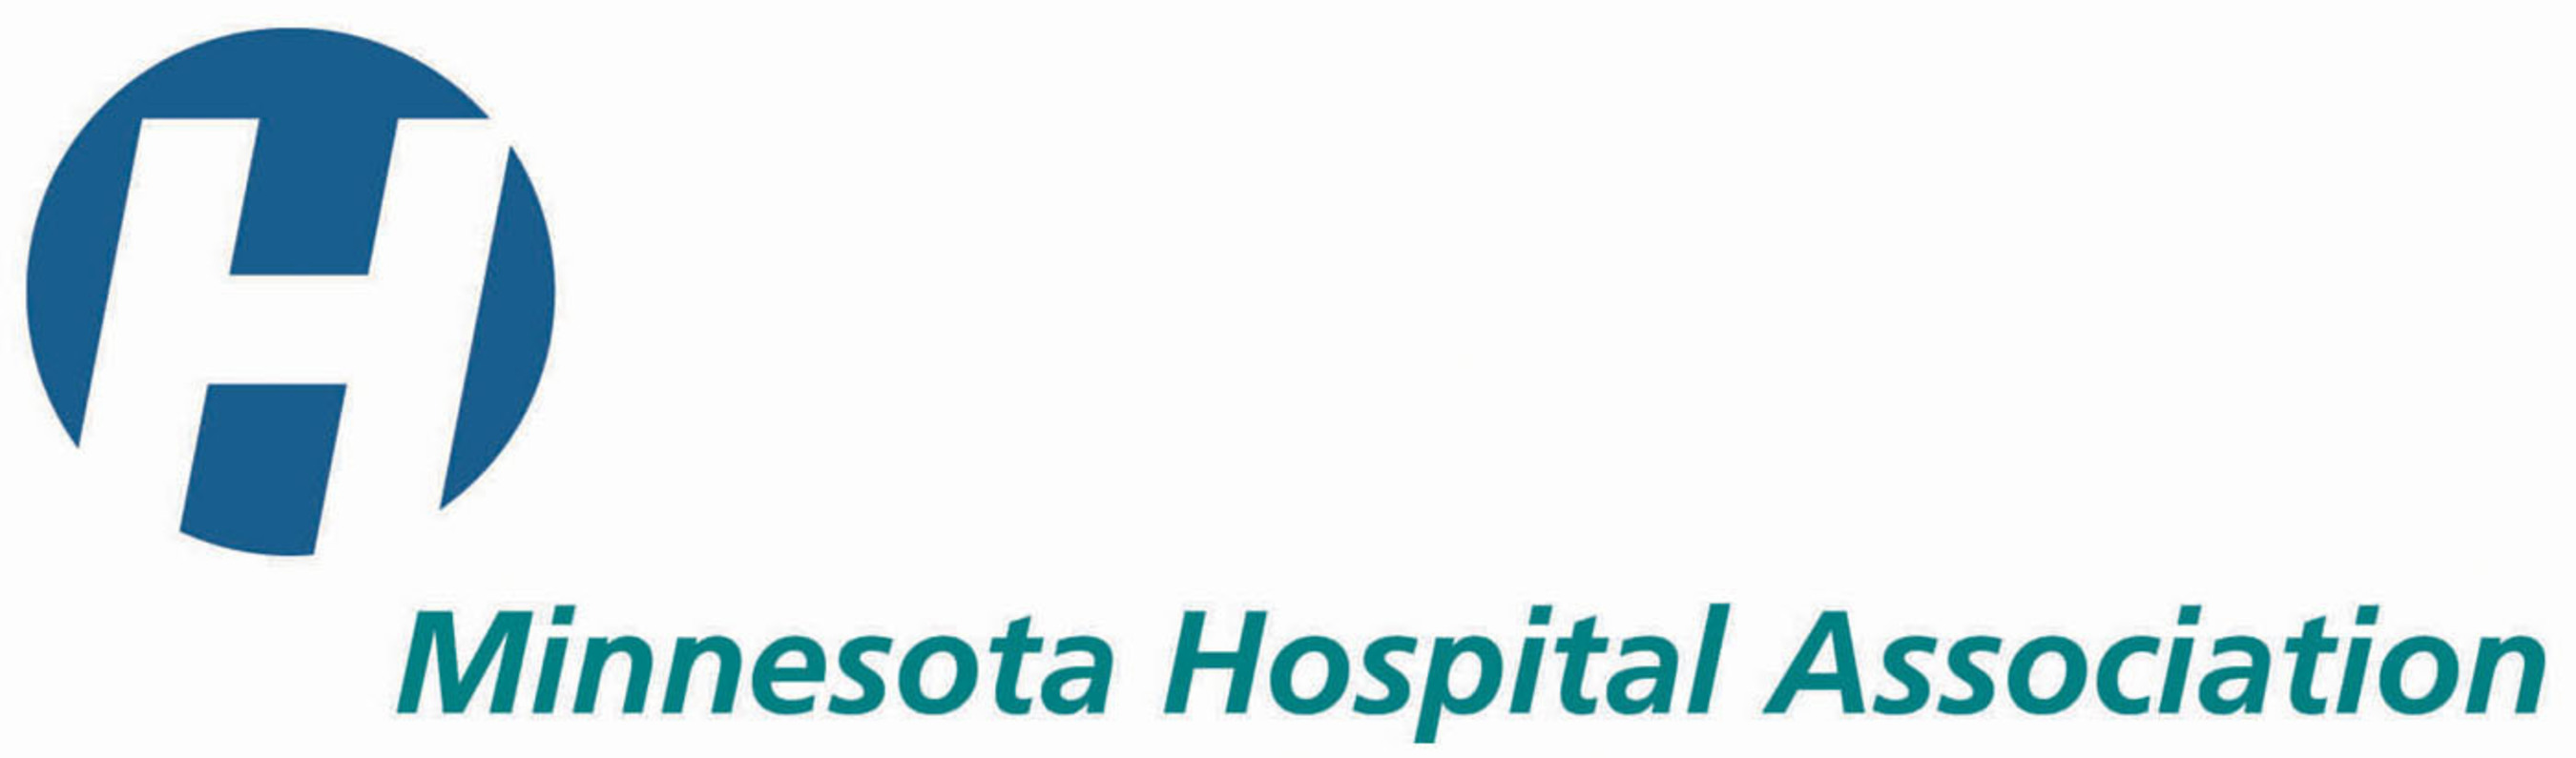 Minnesota Hospital Association logo.